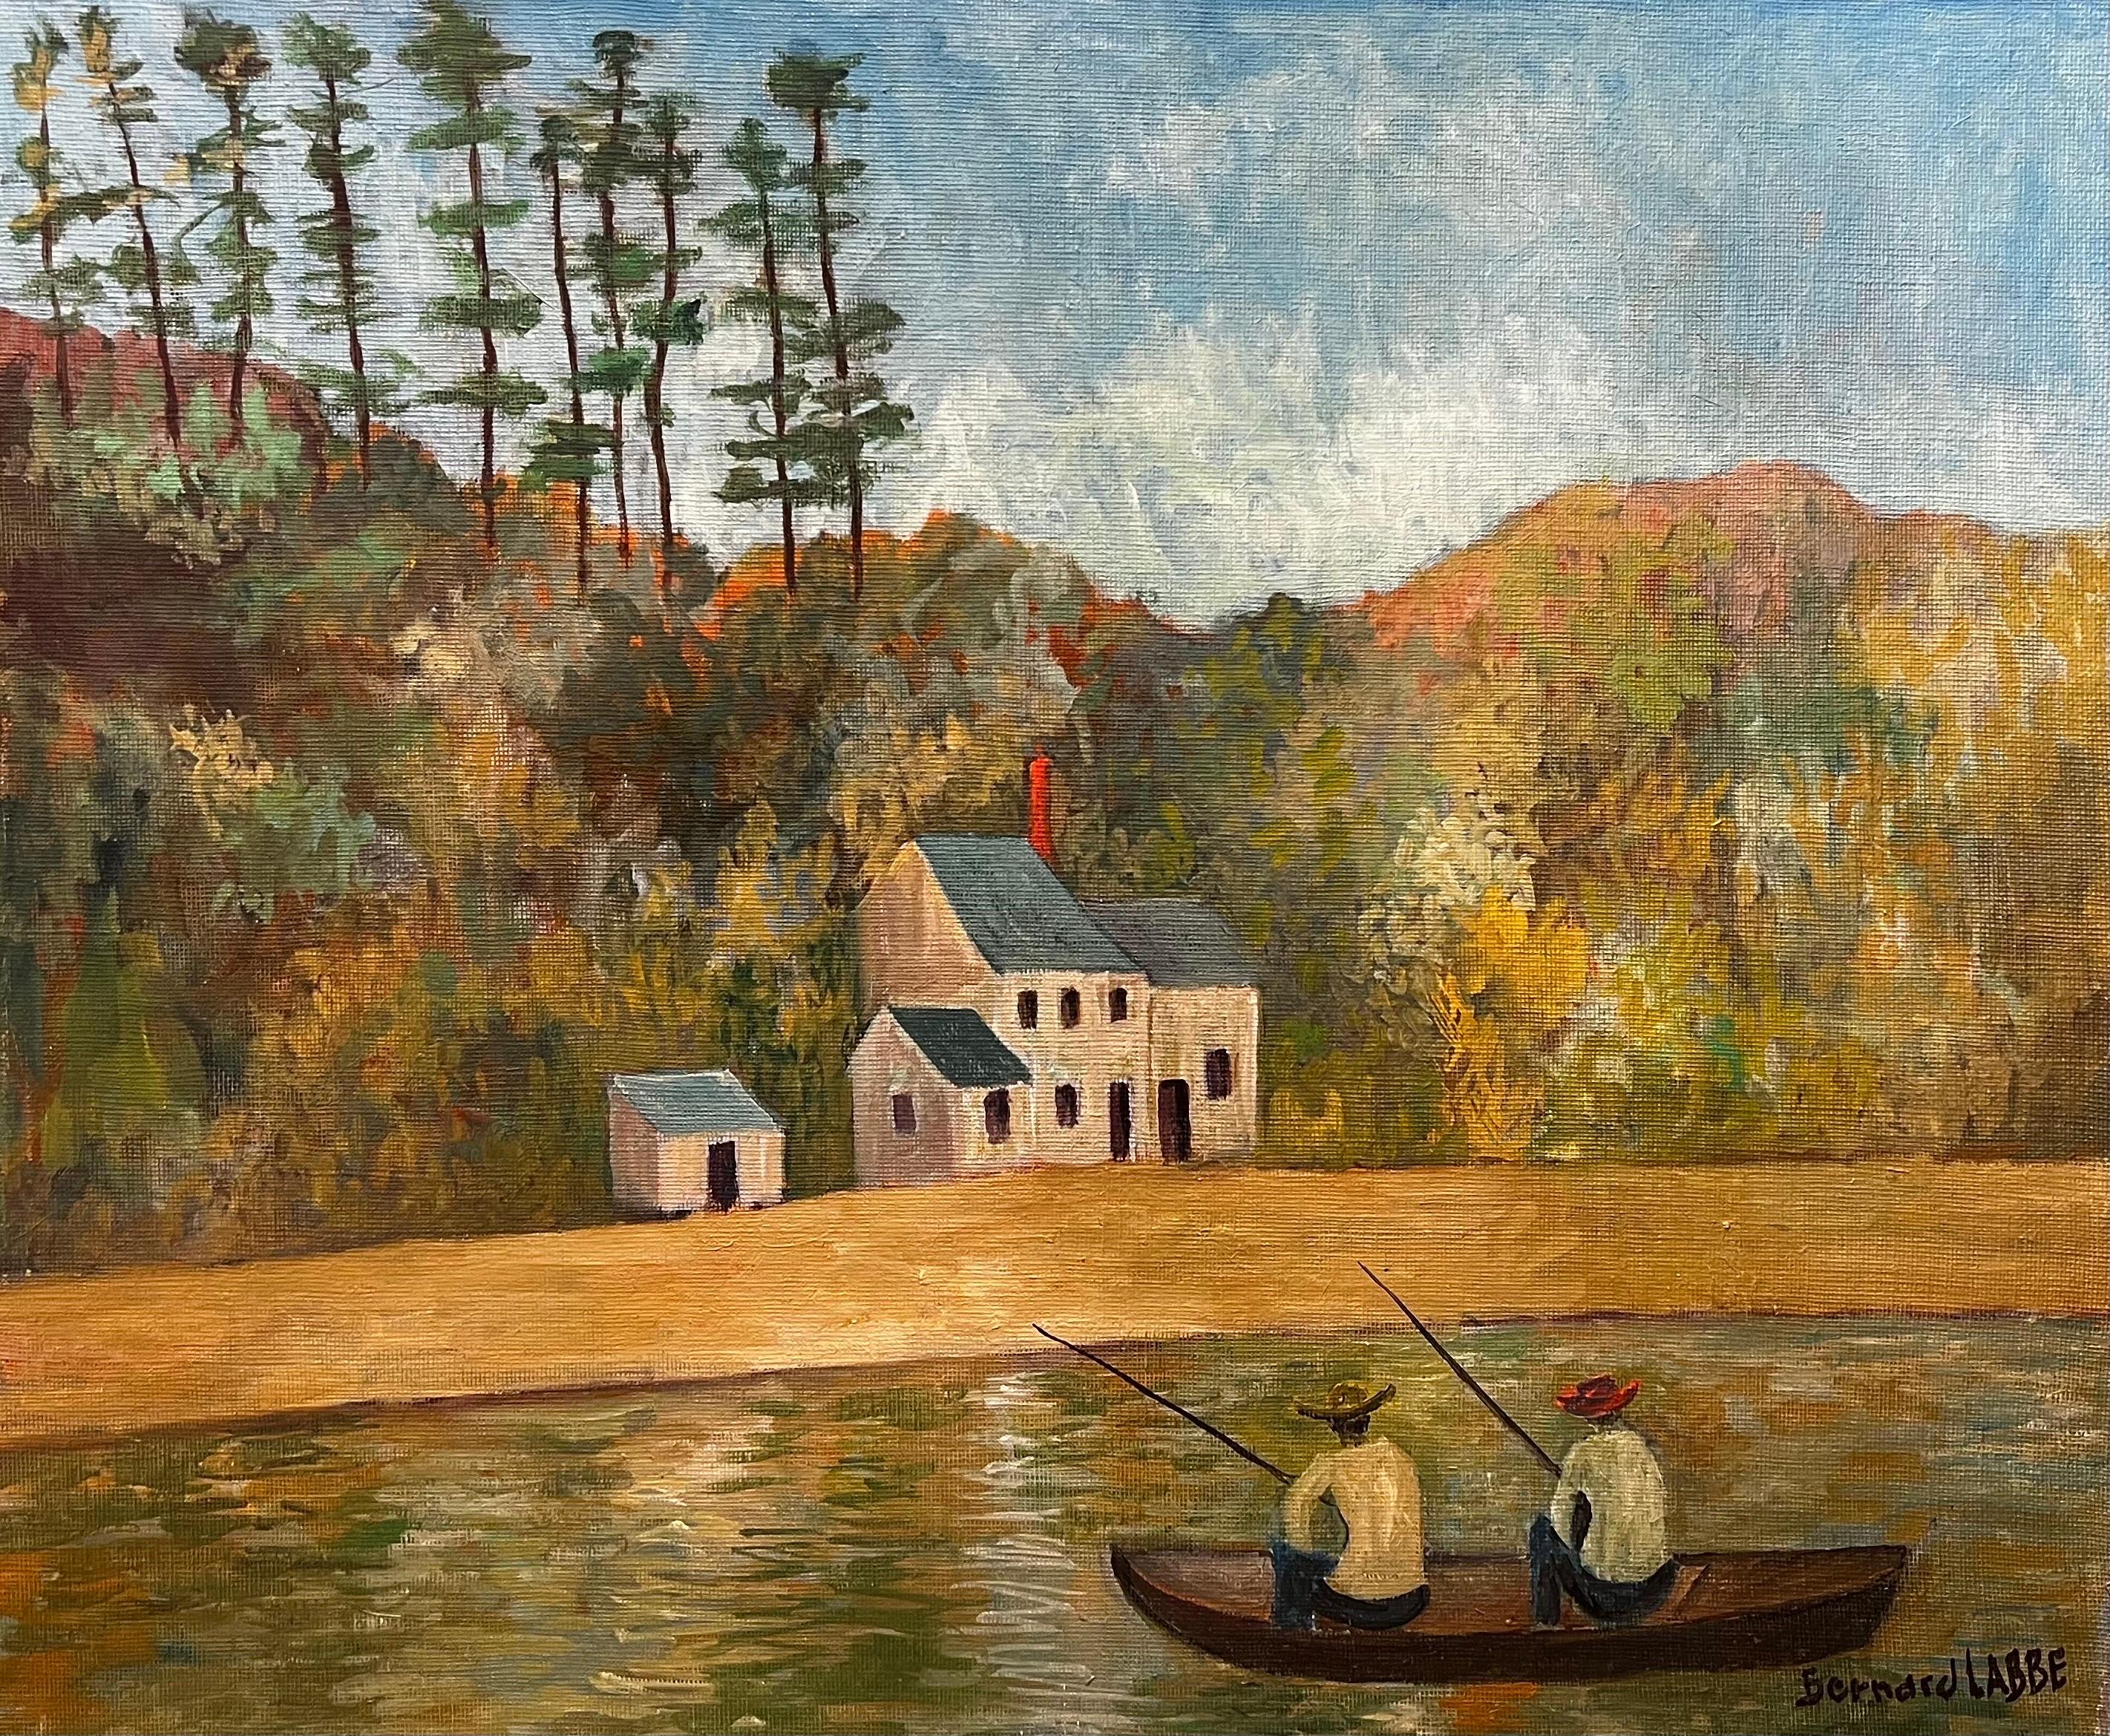 Bernard Labbe Landscape Painting - 1950's Big Modernist/ Cubist Painting - The Two Fishermen